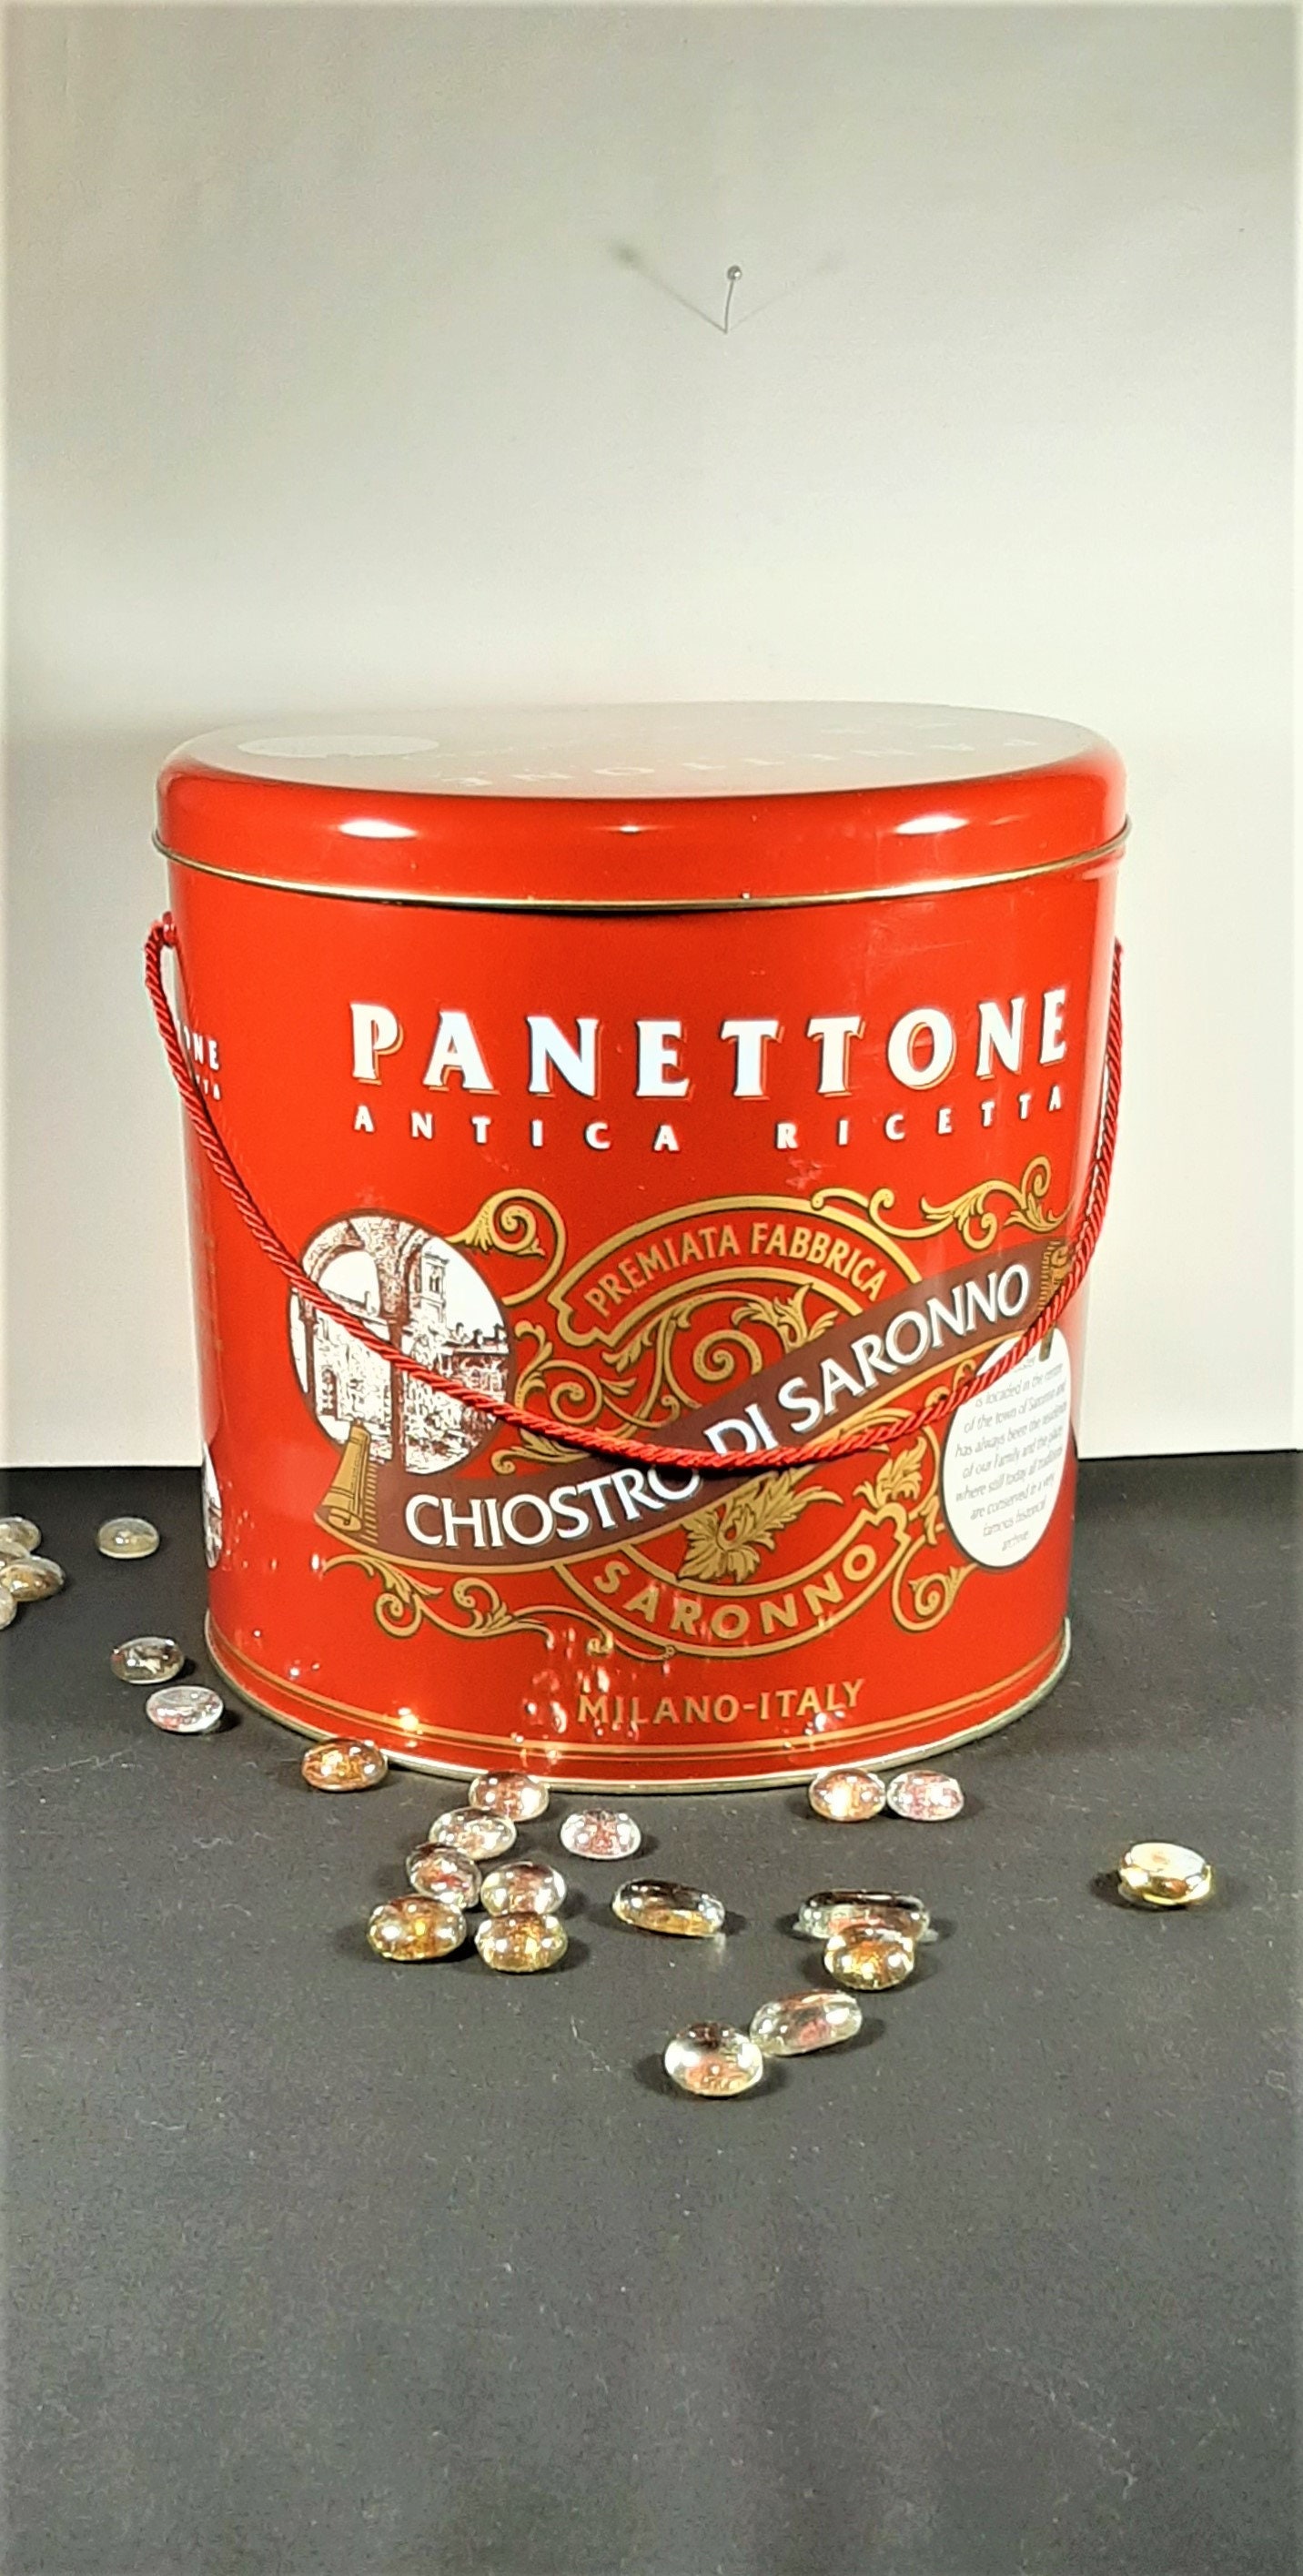 Retro Italian biscuits tins